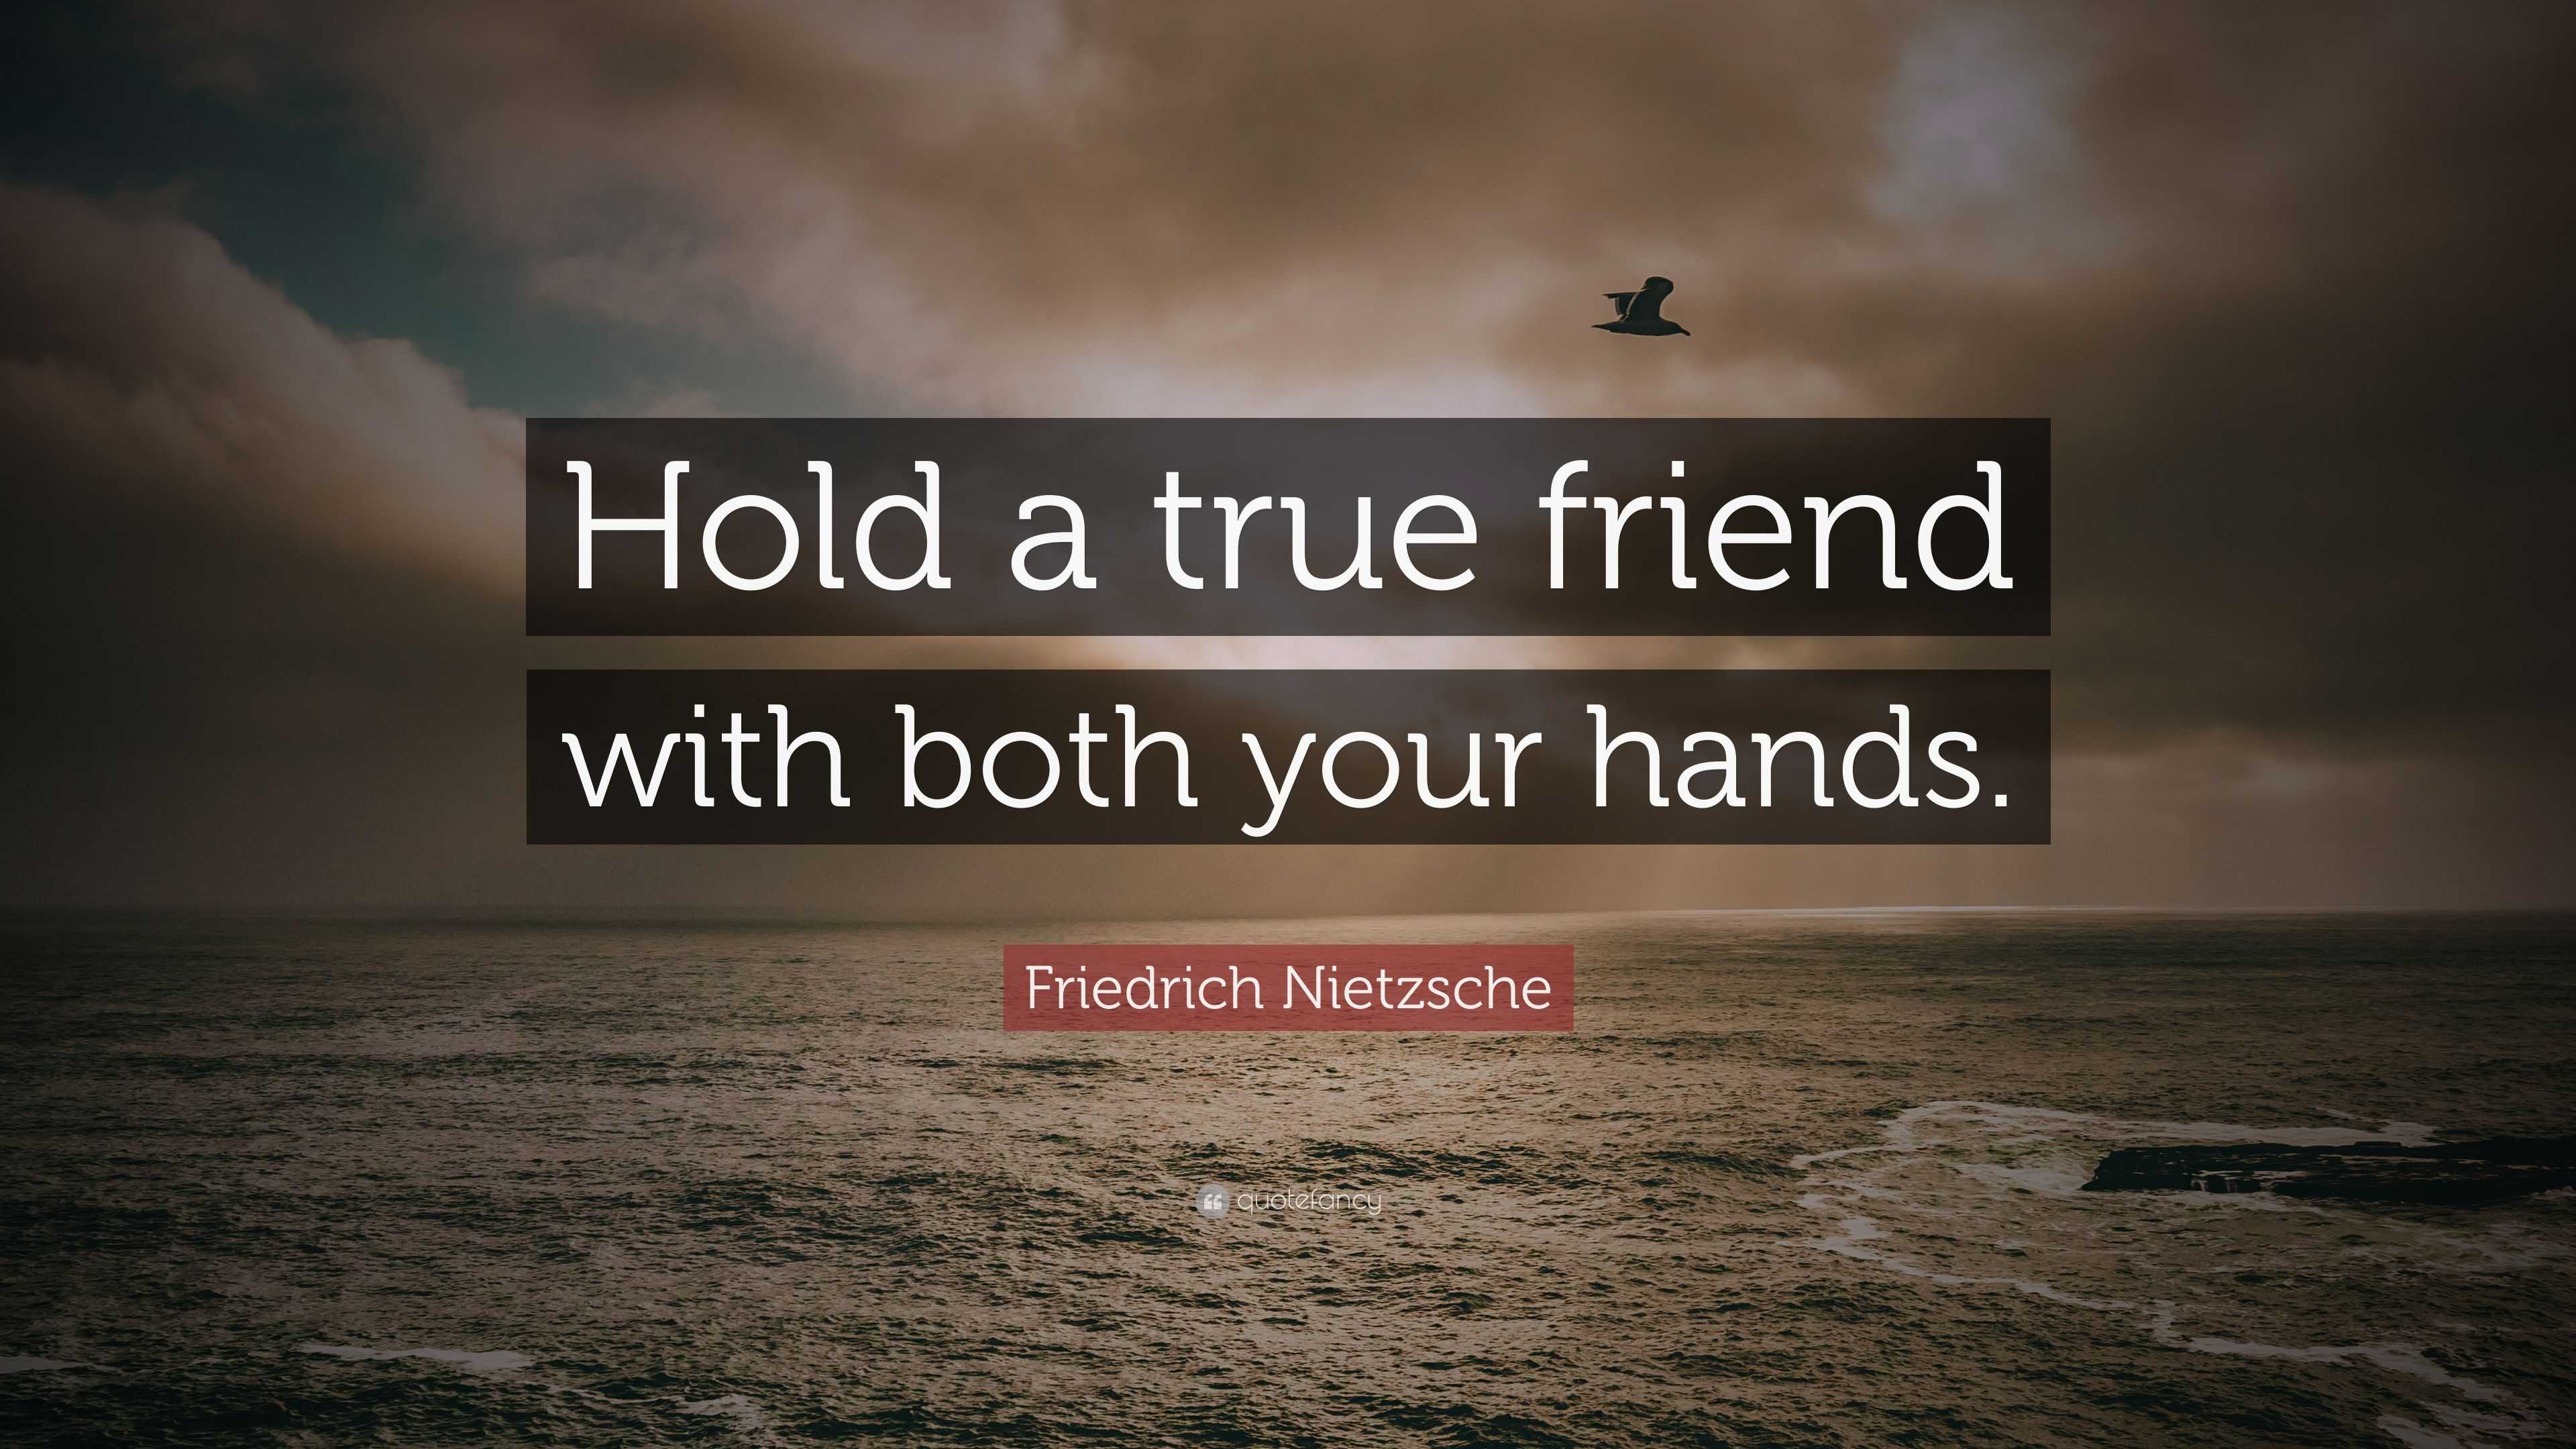 Friedrich Nietzsche Quote: “Hold a true friend with both your hands.”